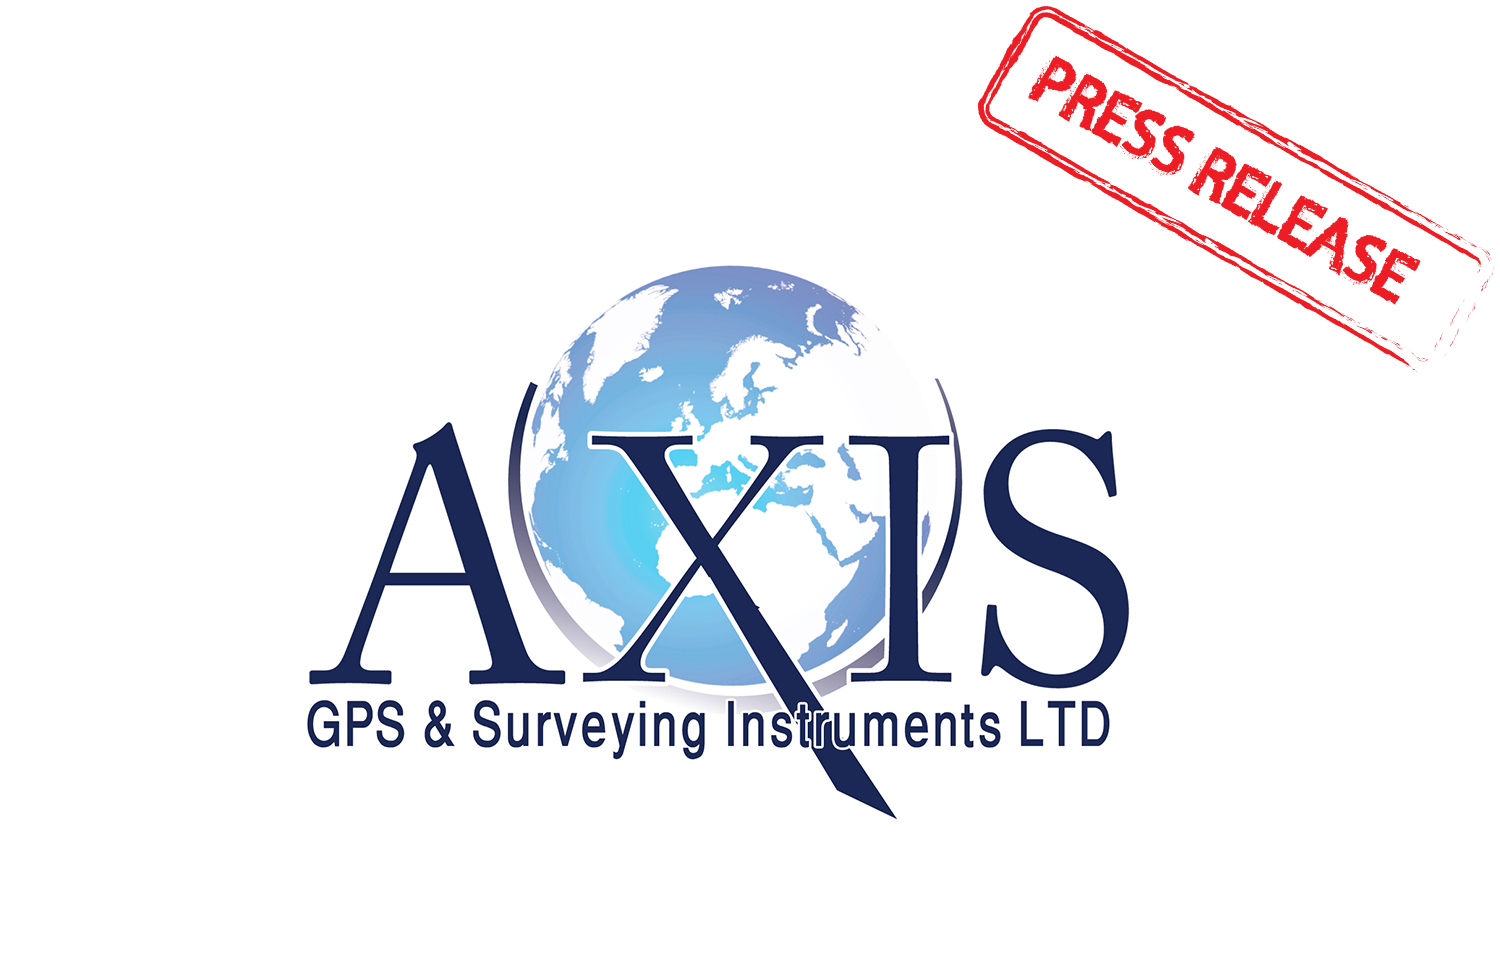 AXIS-GPS为以色列陆地与航空测绘客户提供Applanix产品与解决方案